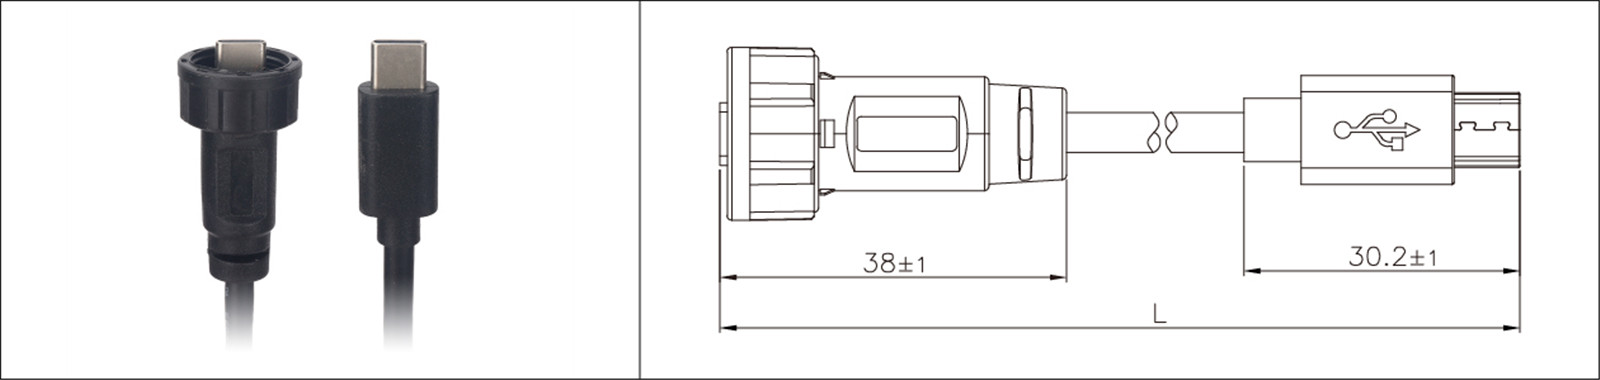 Micro USB لوحة جبل نوع 2.0 3.0 أنثى وذكر مقاوم للماء IP67 كابل تمديد overmold موصل صناعي-02 (7)